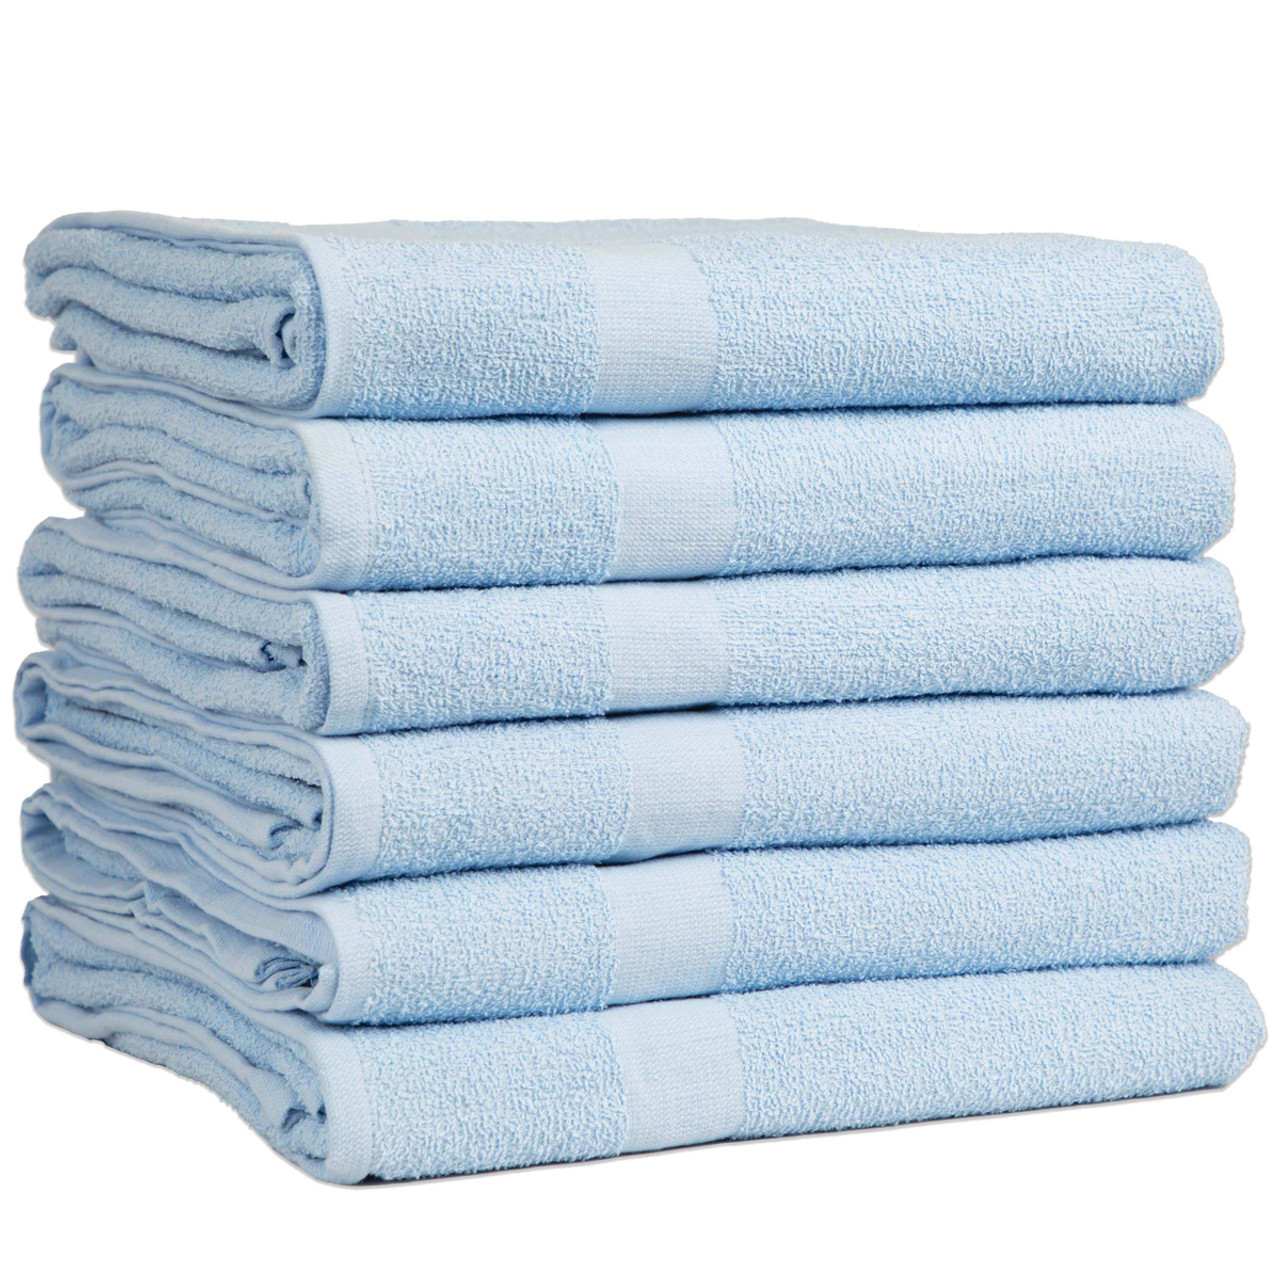 XL Premium Weight Cotton Pool Towel